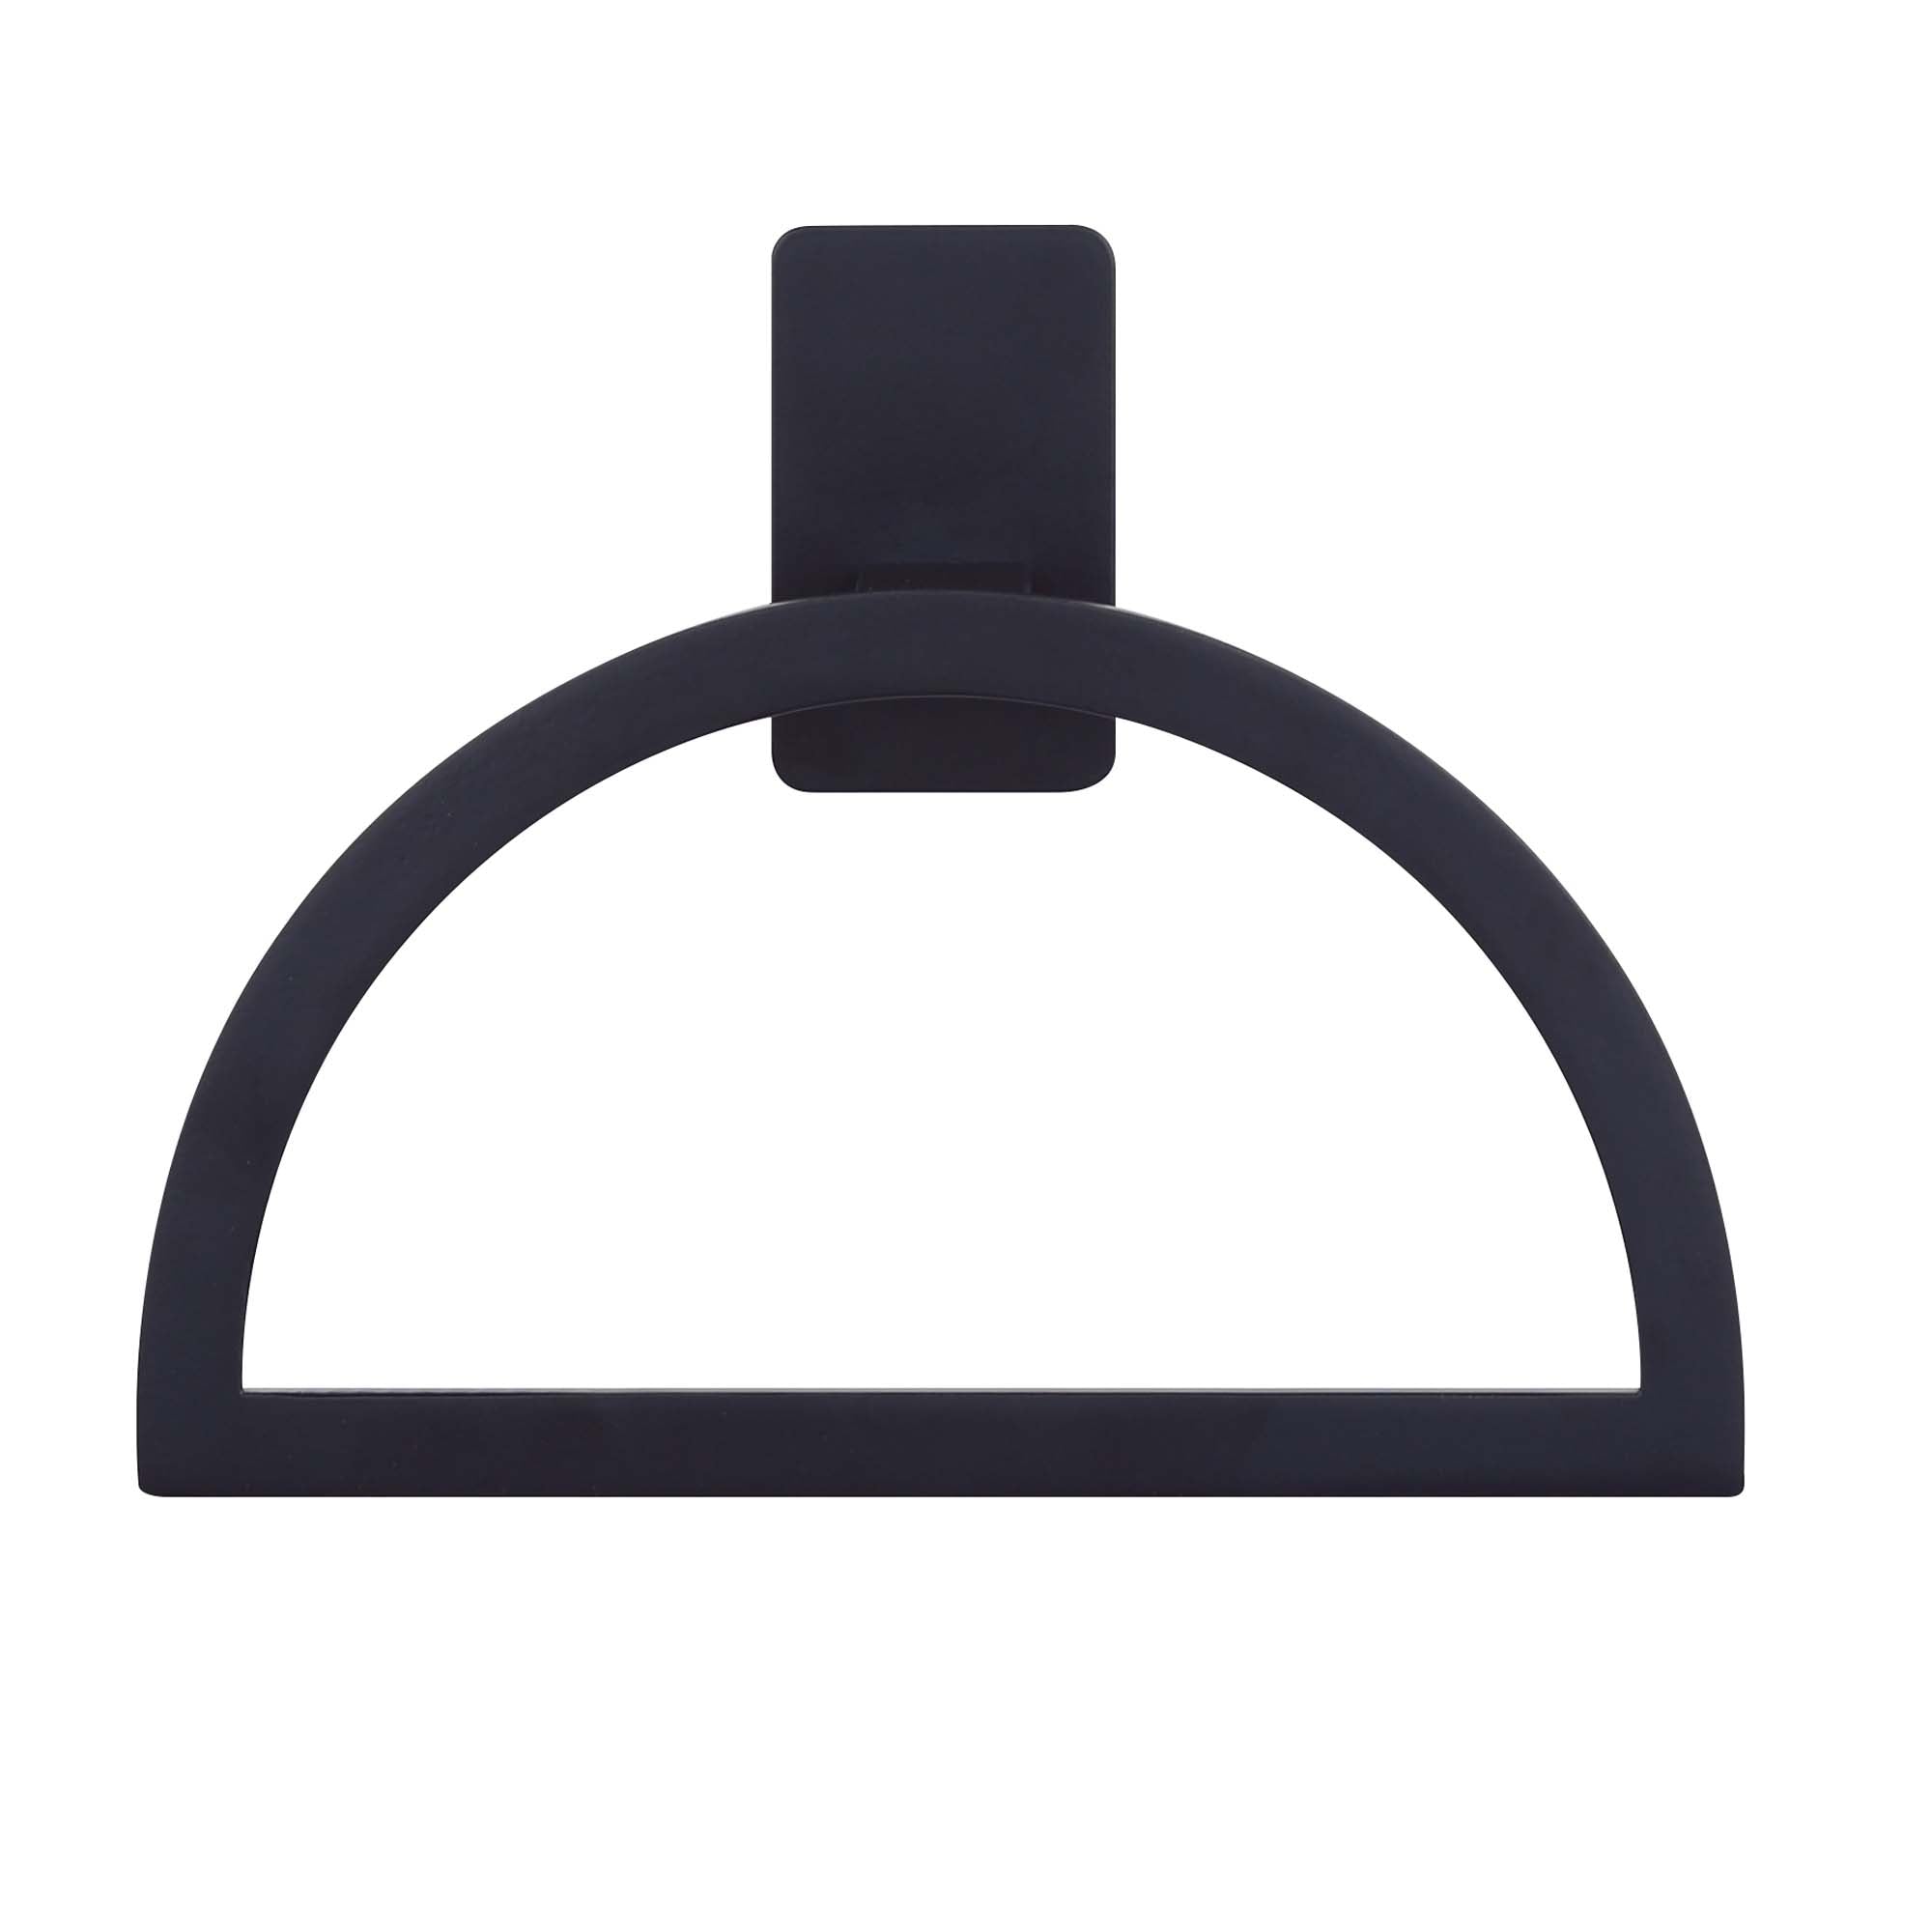 ARCHER Decorative accessory Black - BA106A06BK | CANARM